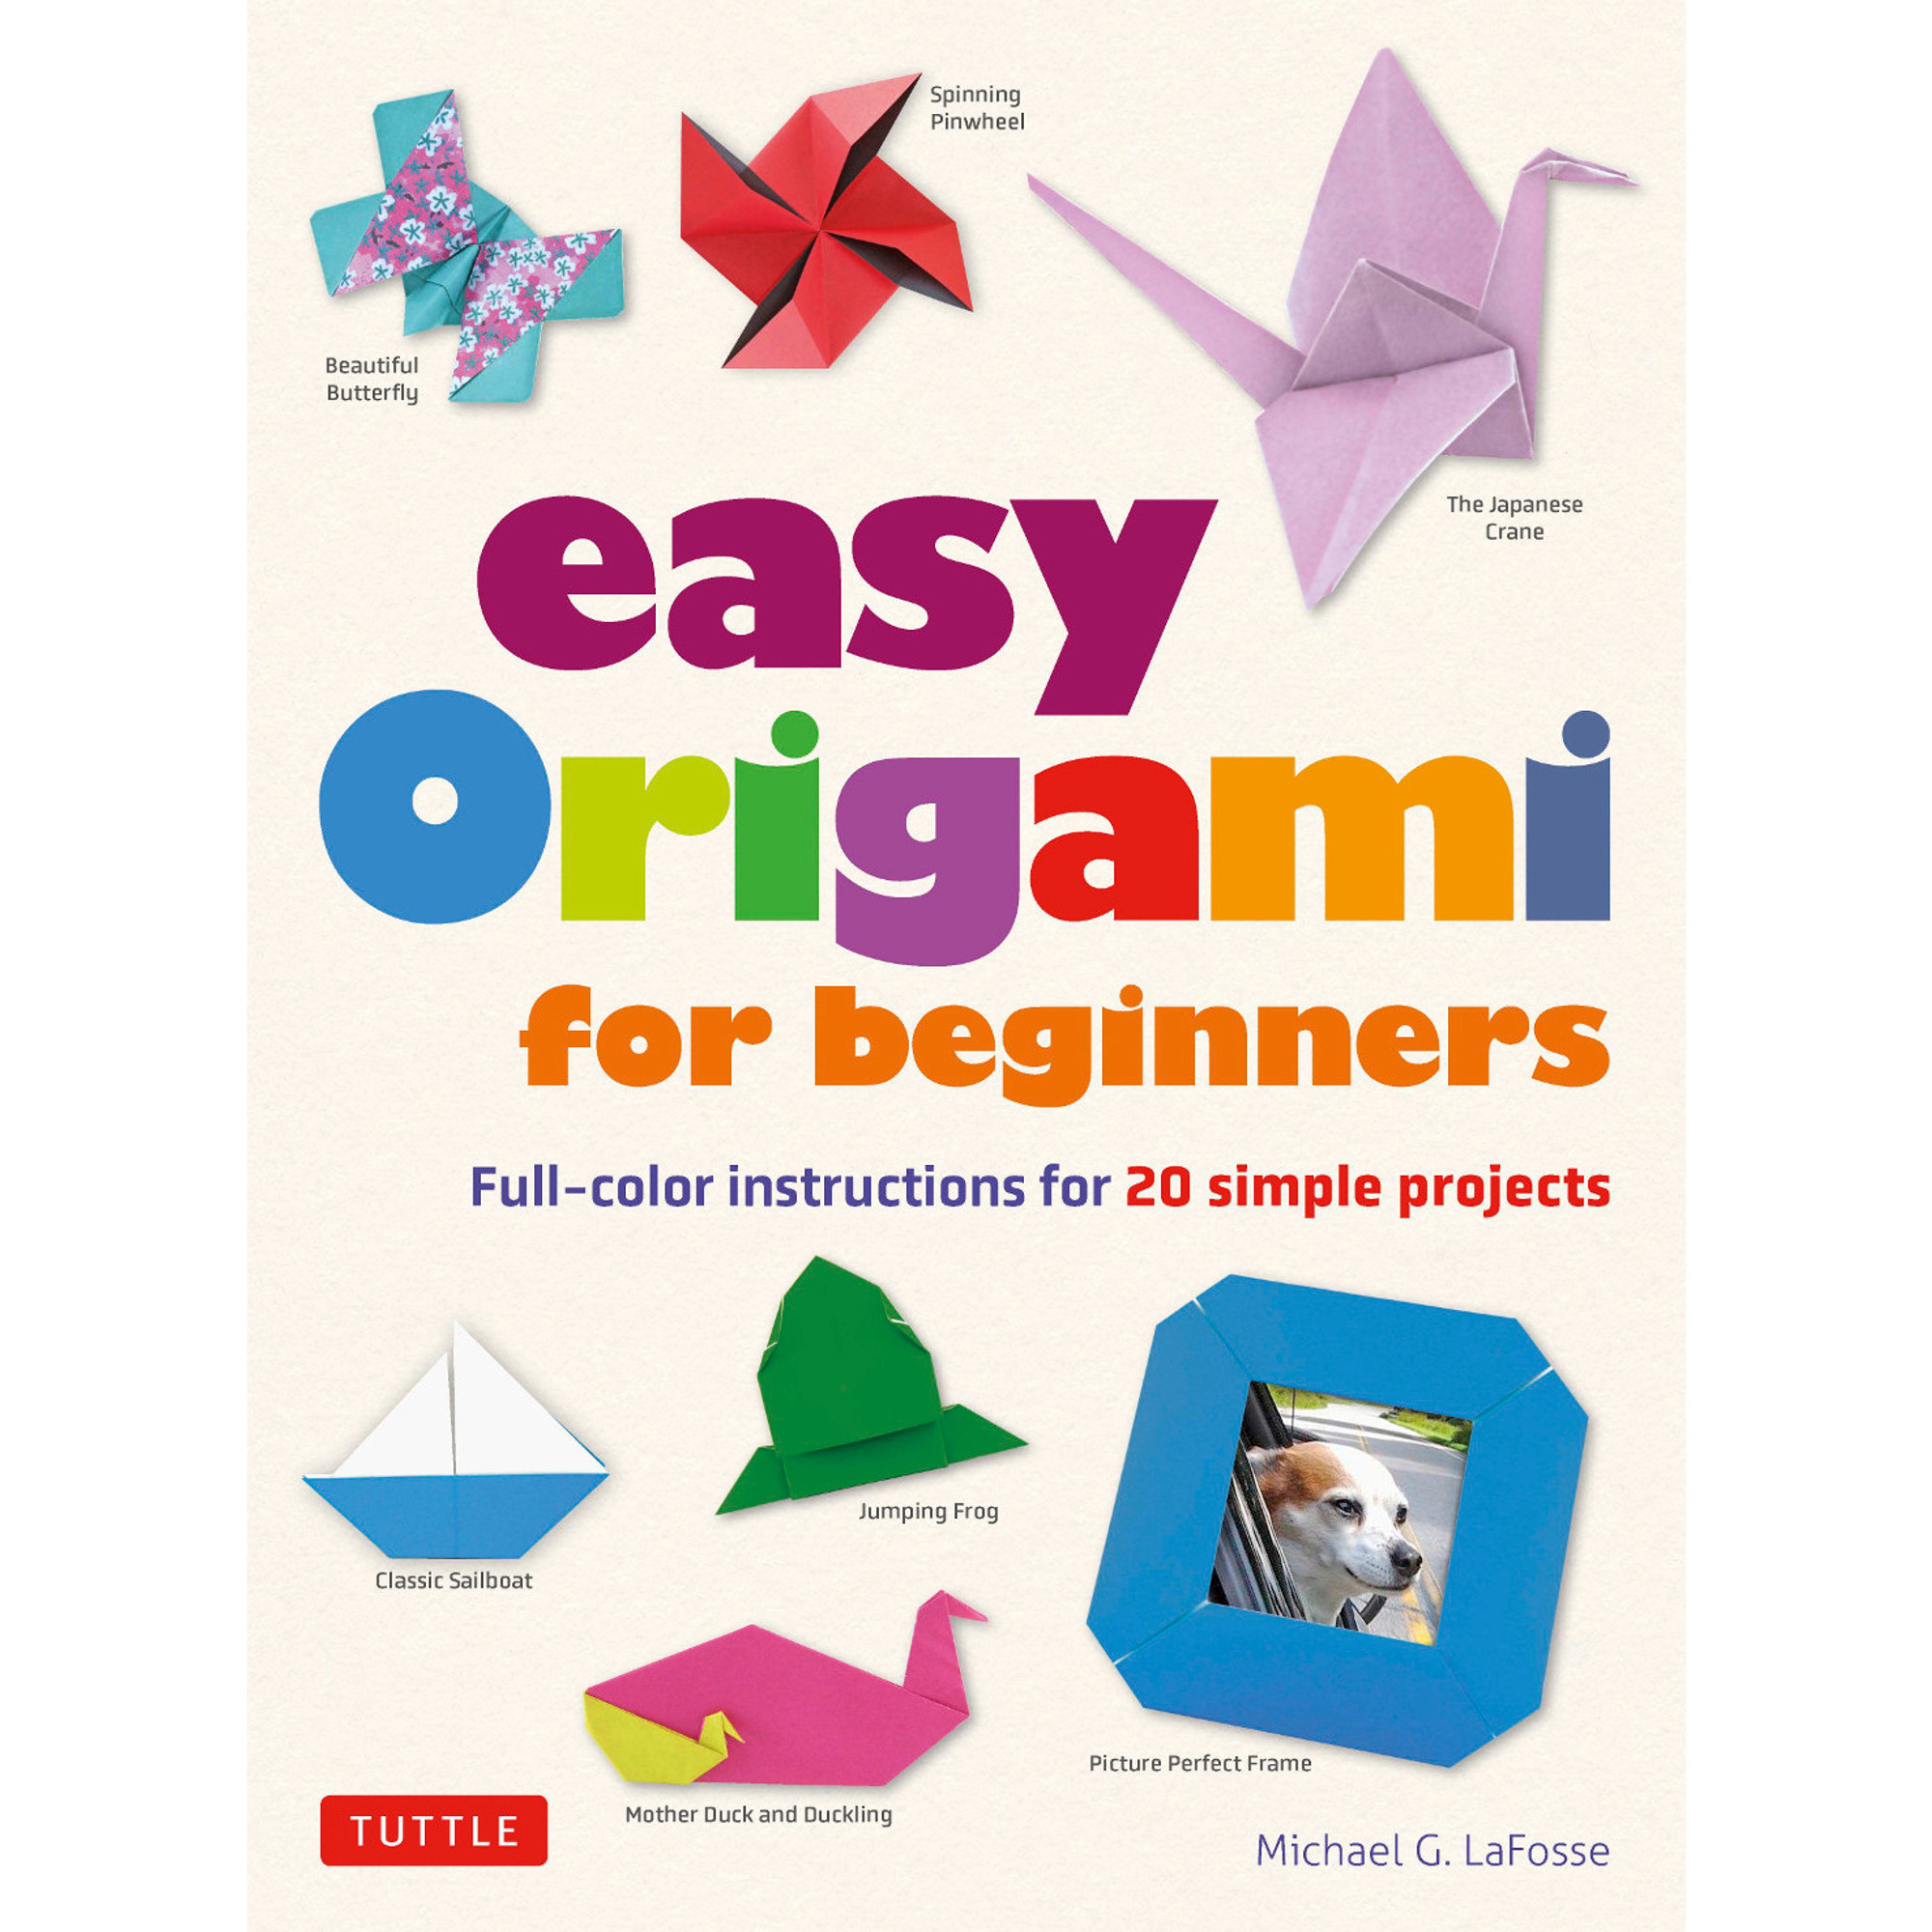 Origami Paper Magic Kit, Arts & Crafts